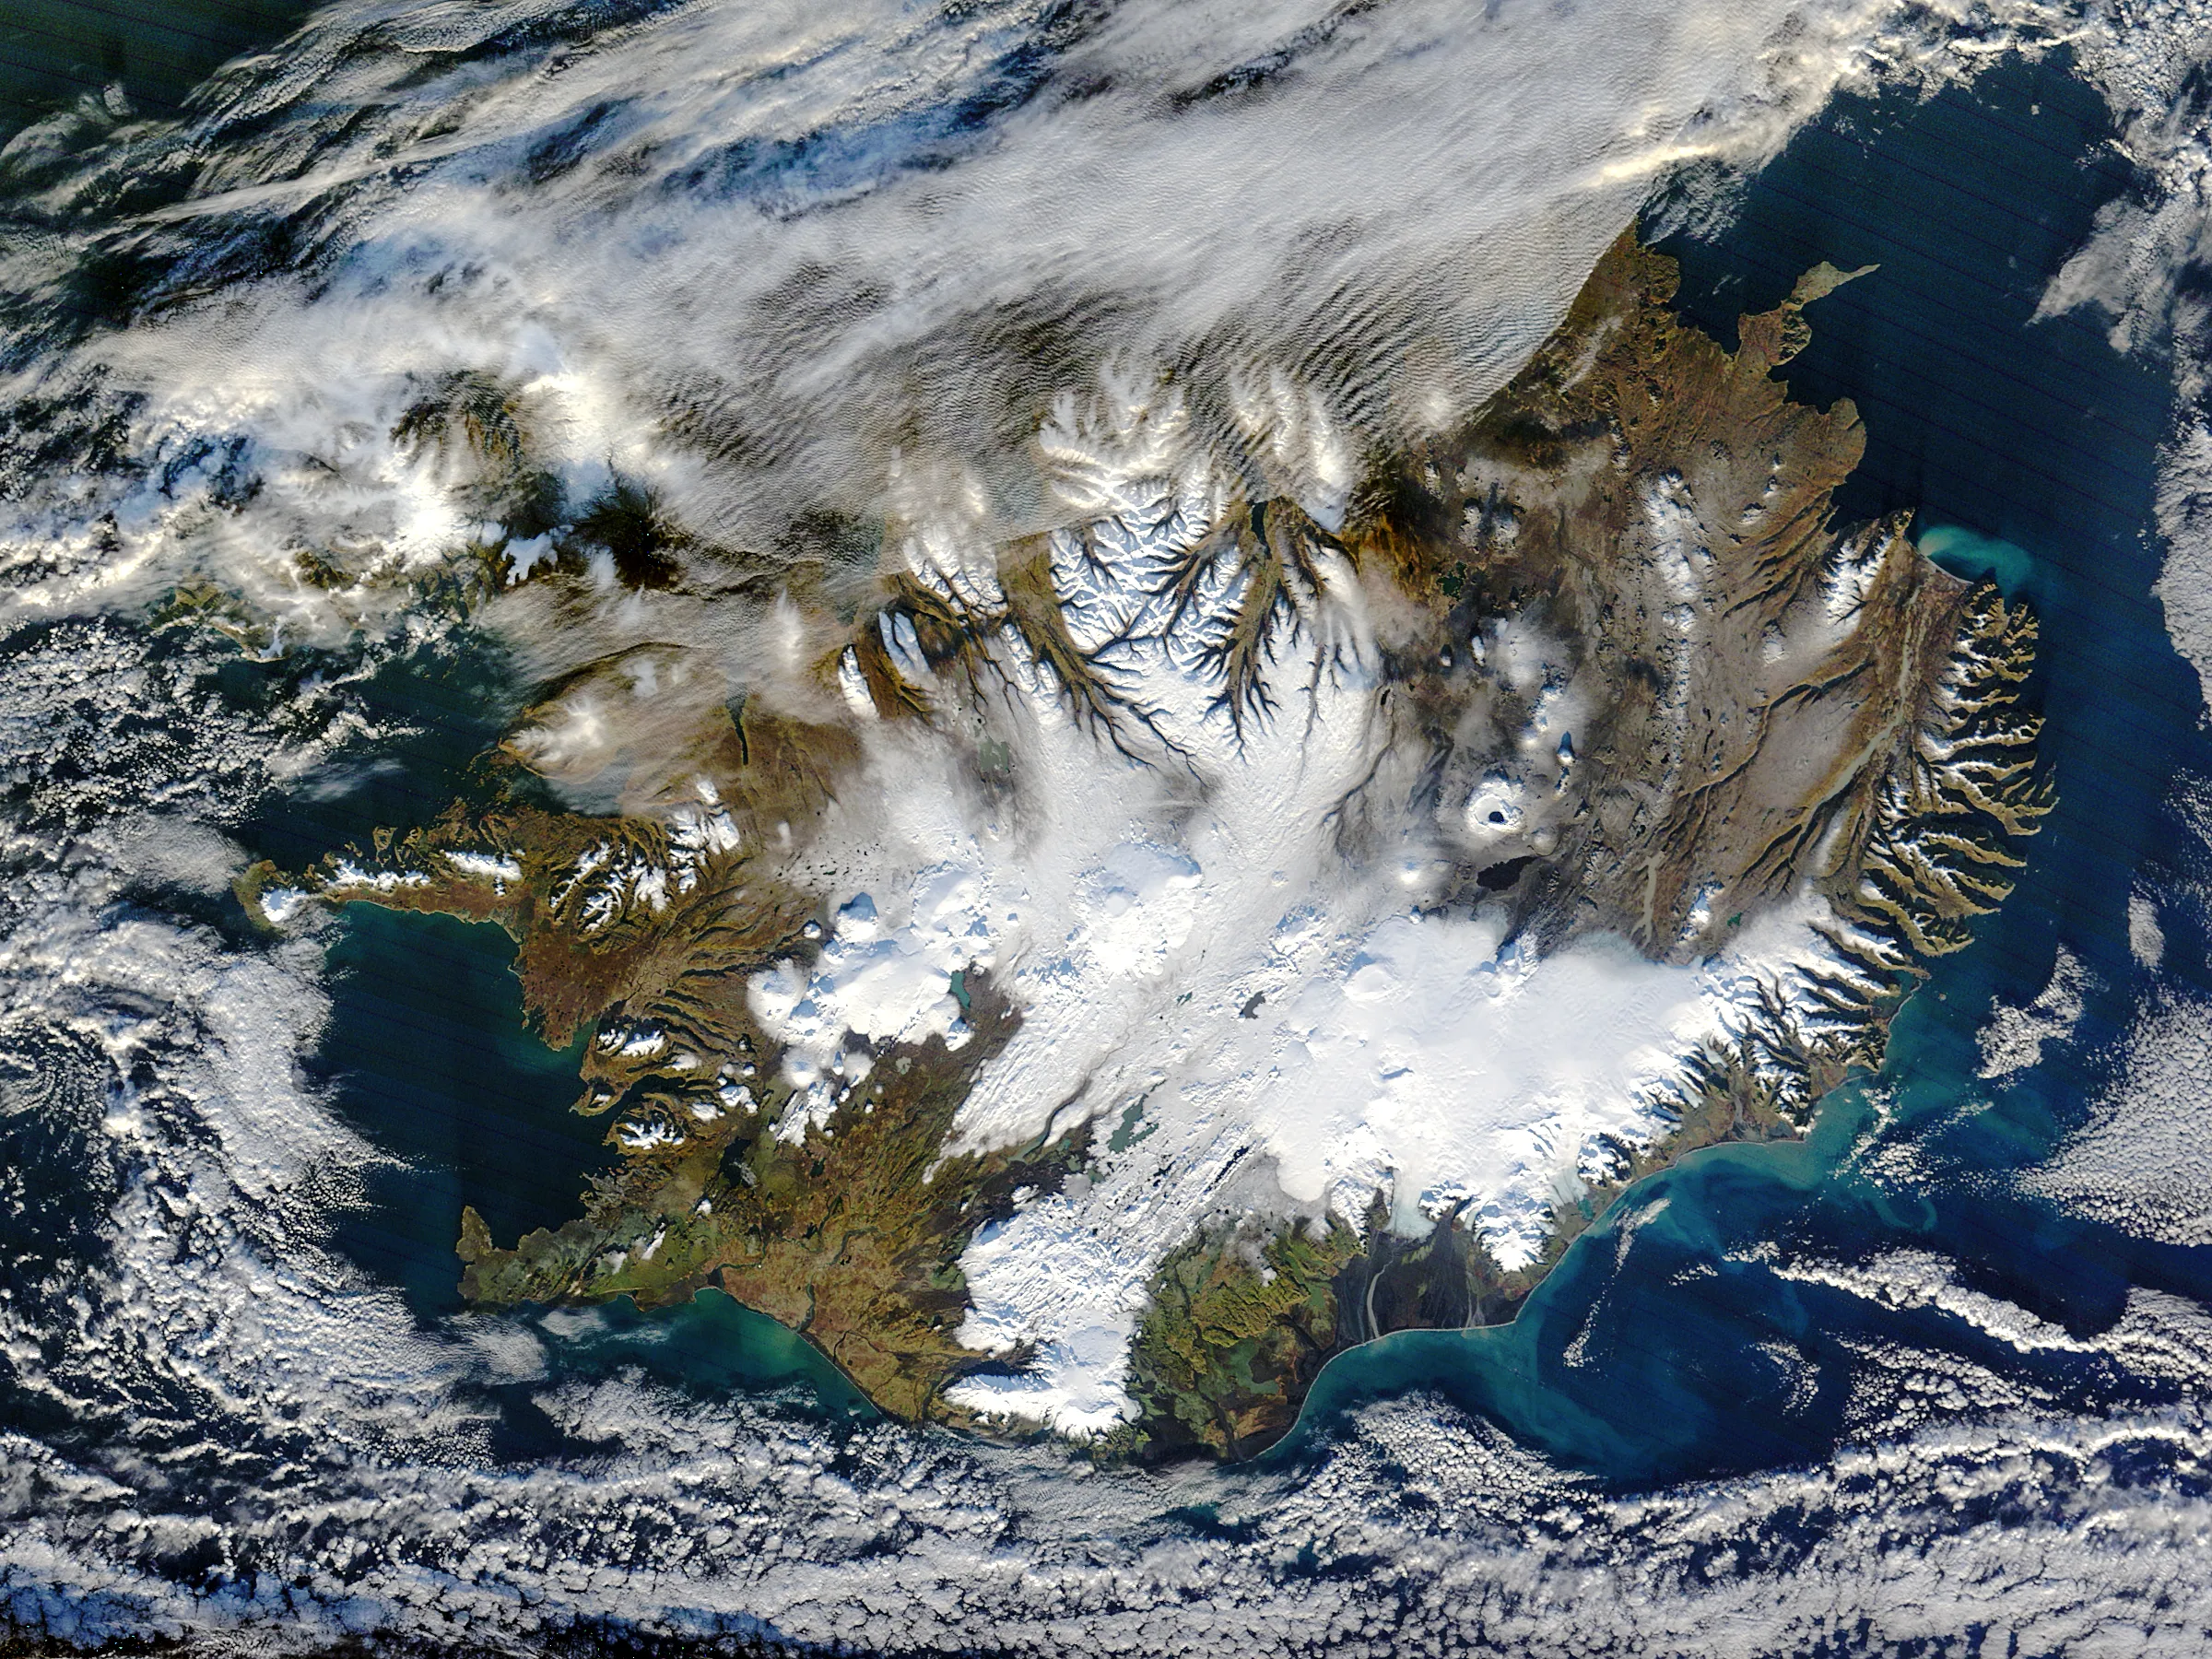 Hofsjokull in Iceland, Europe | Volcanos,Glaciers - Rated 0.5